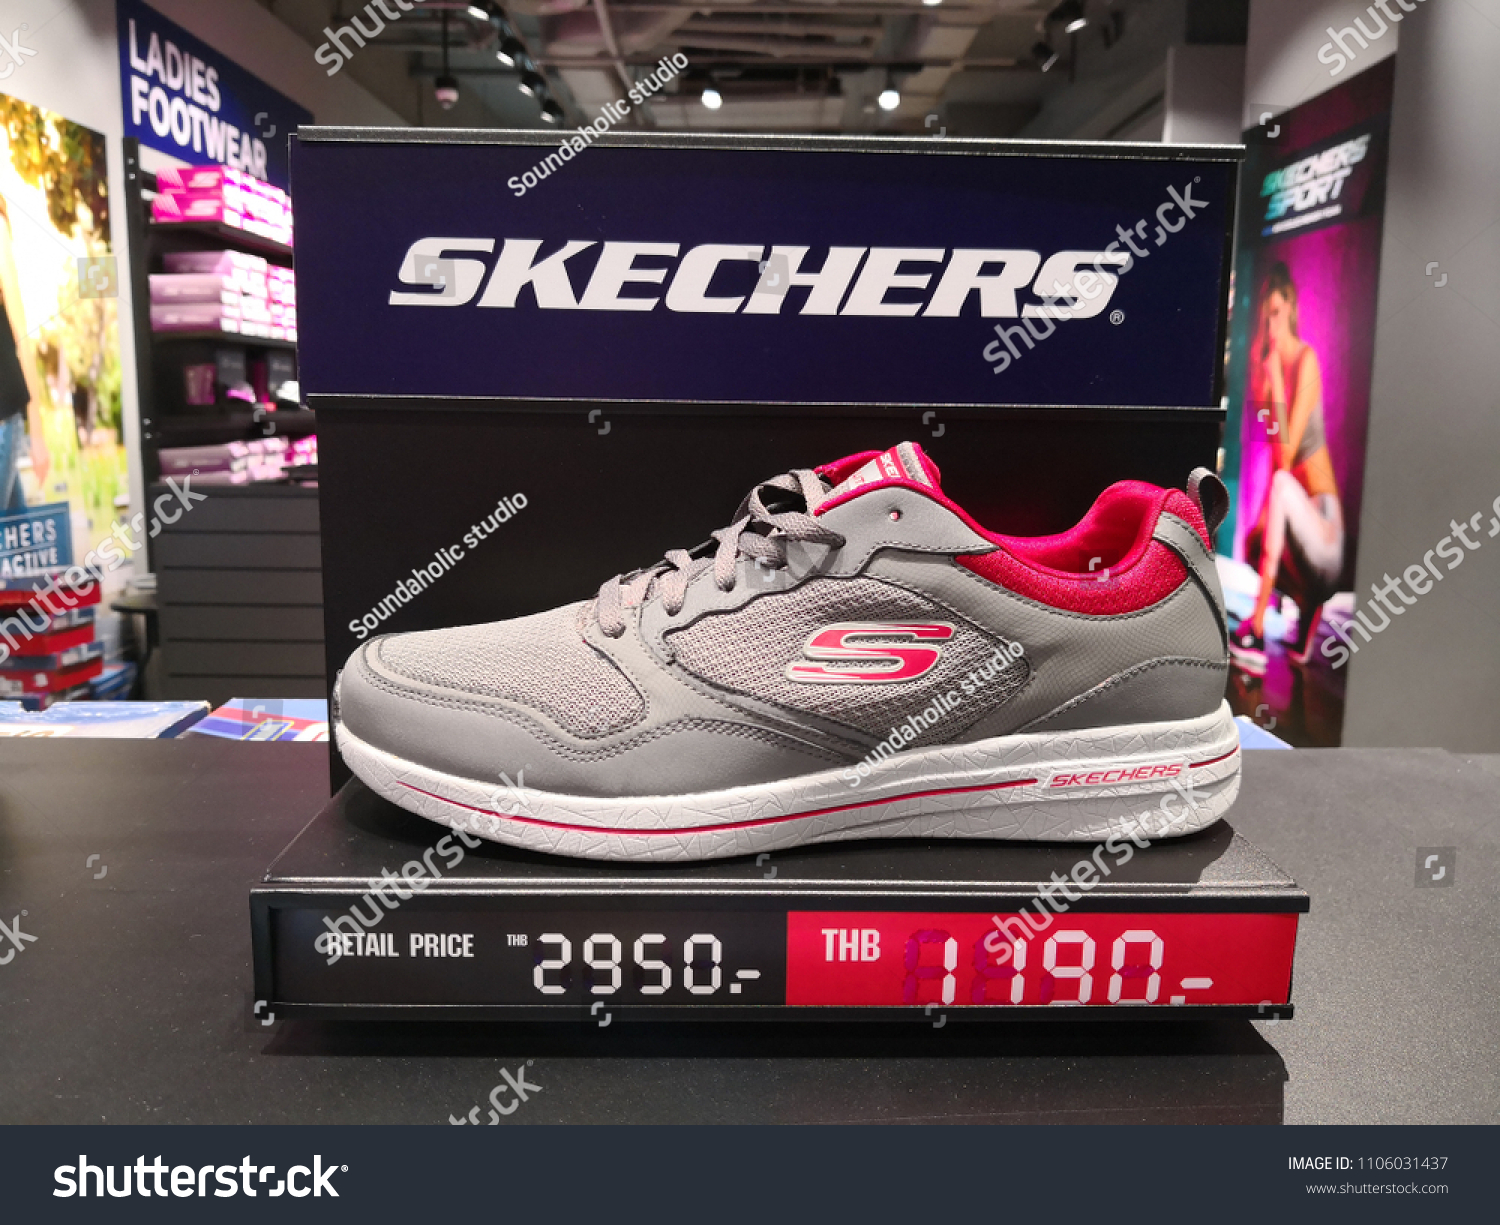 skechers shoes thailand